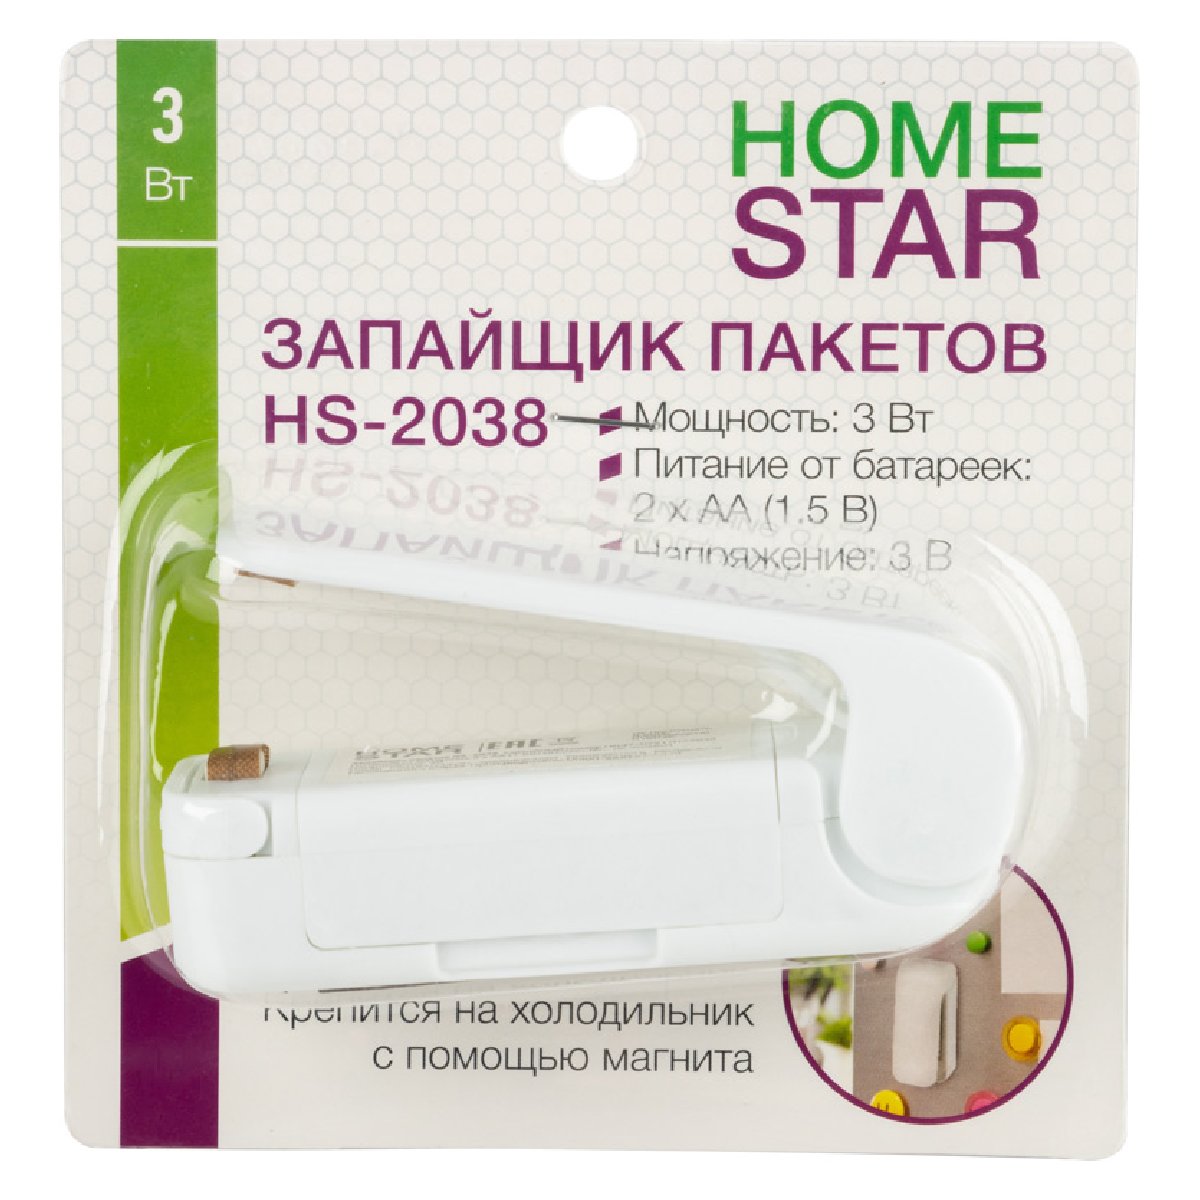 Запайщик пакетов Homestar HS-2038 (103569)